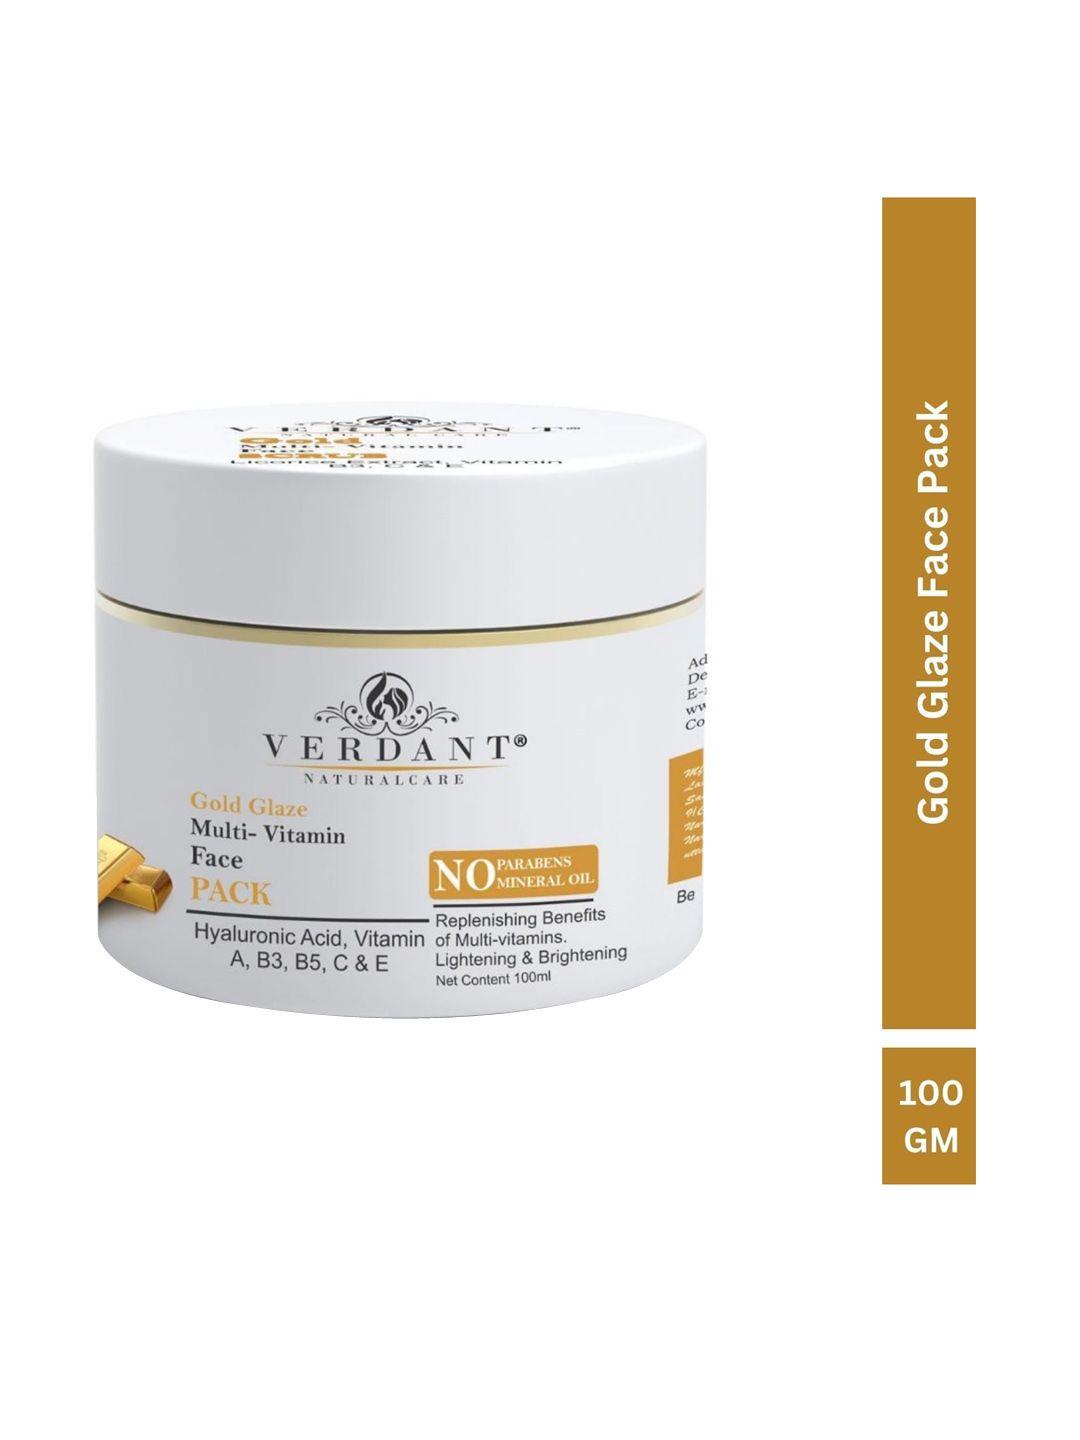 verdant natural care gold glaze multi-vitamin face pack-100 ml